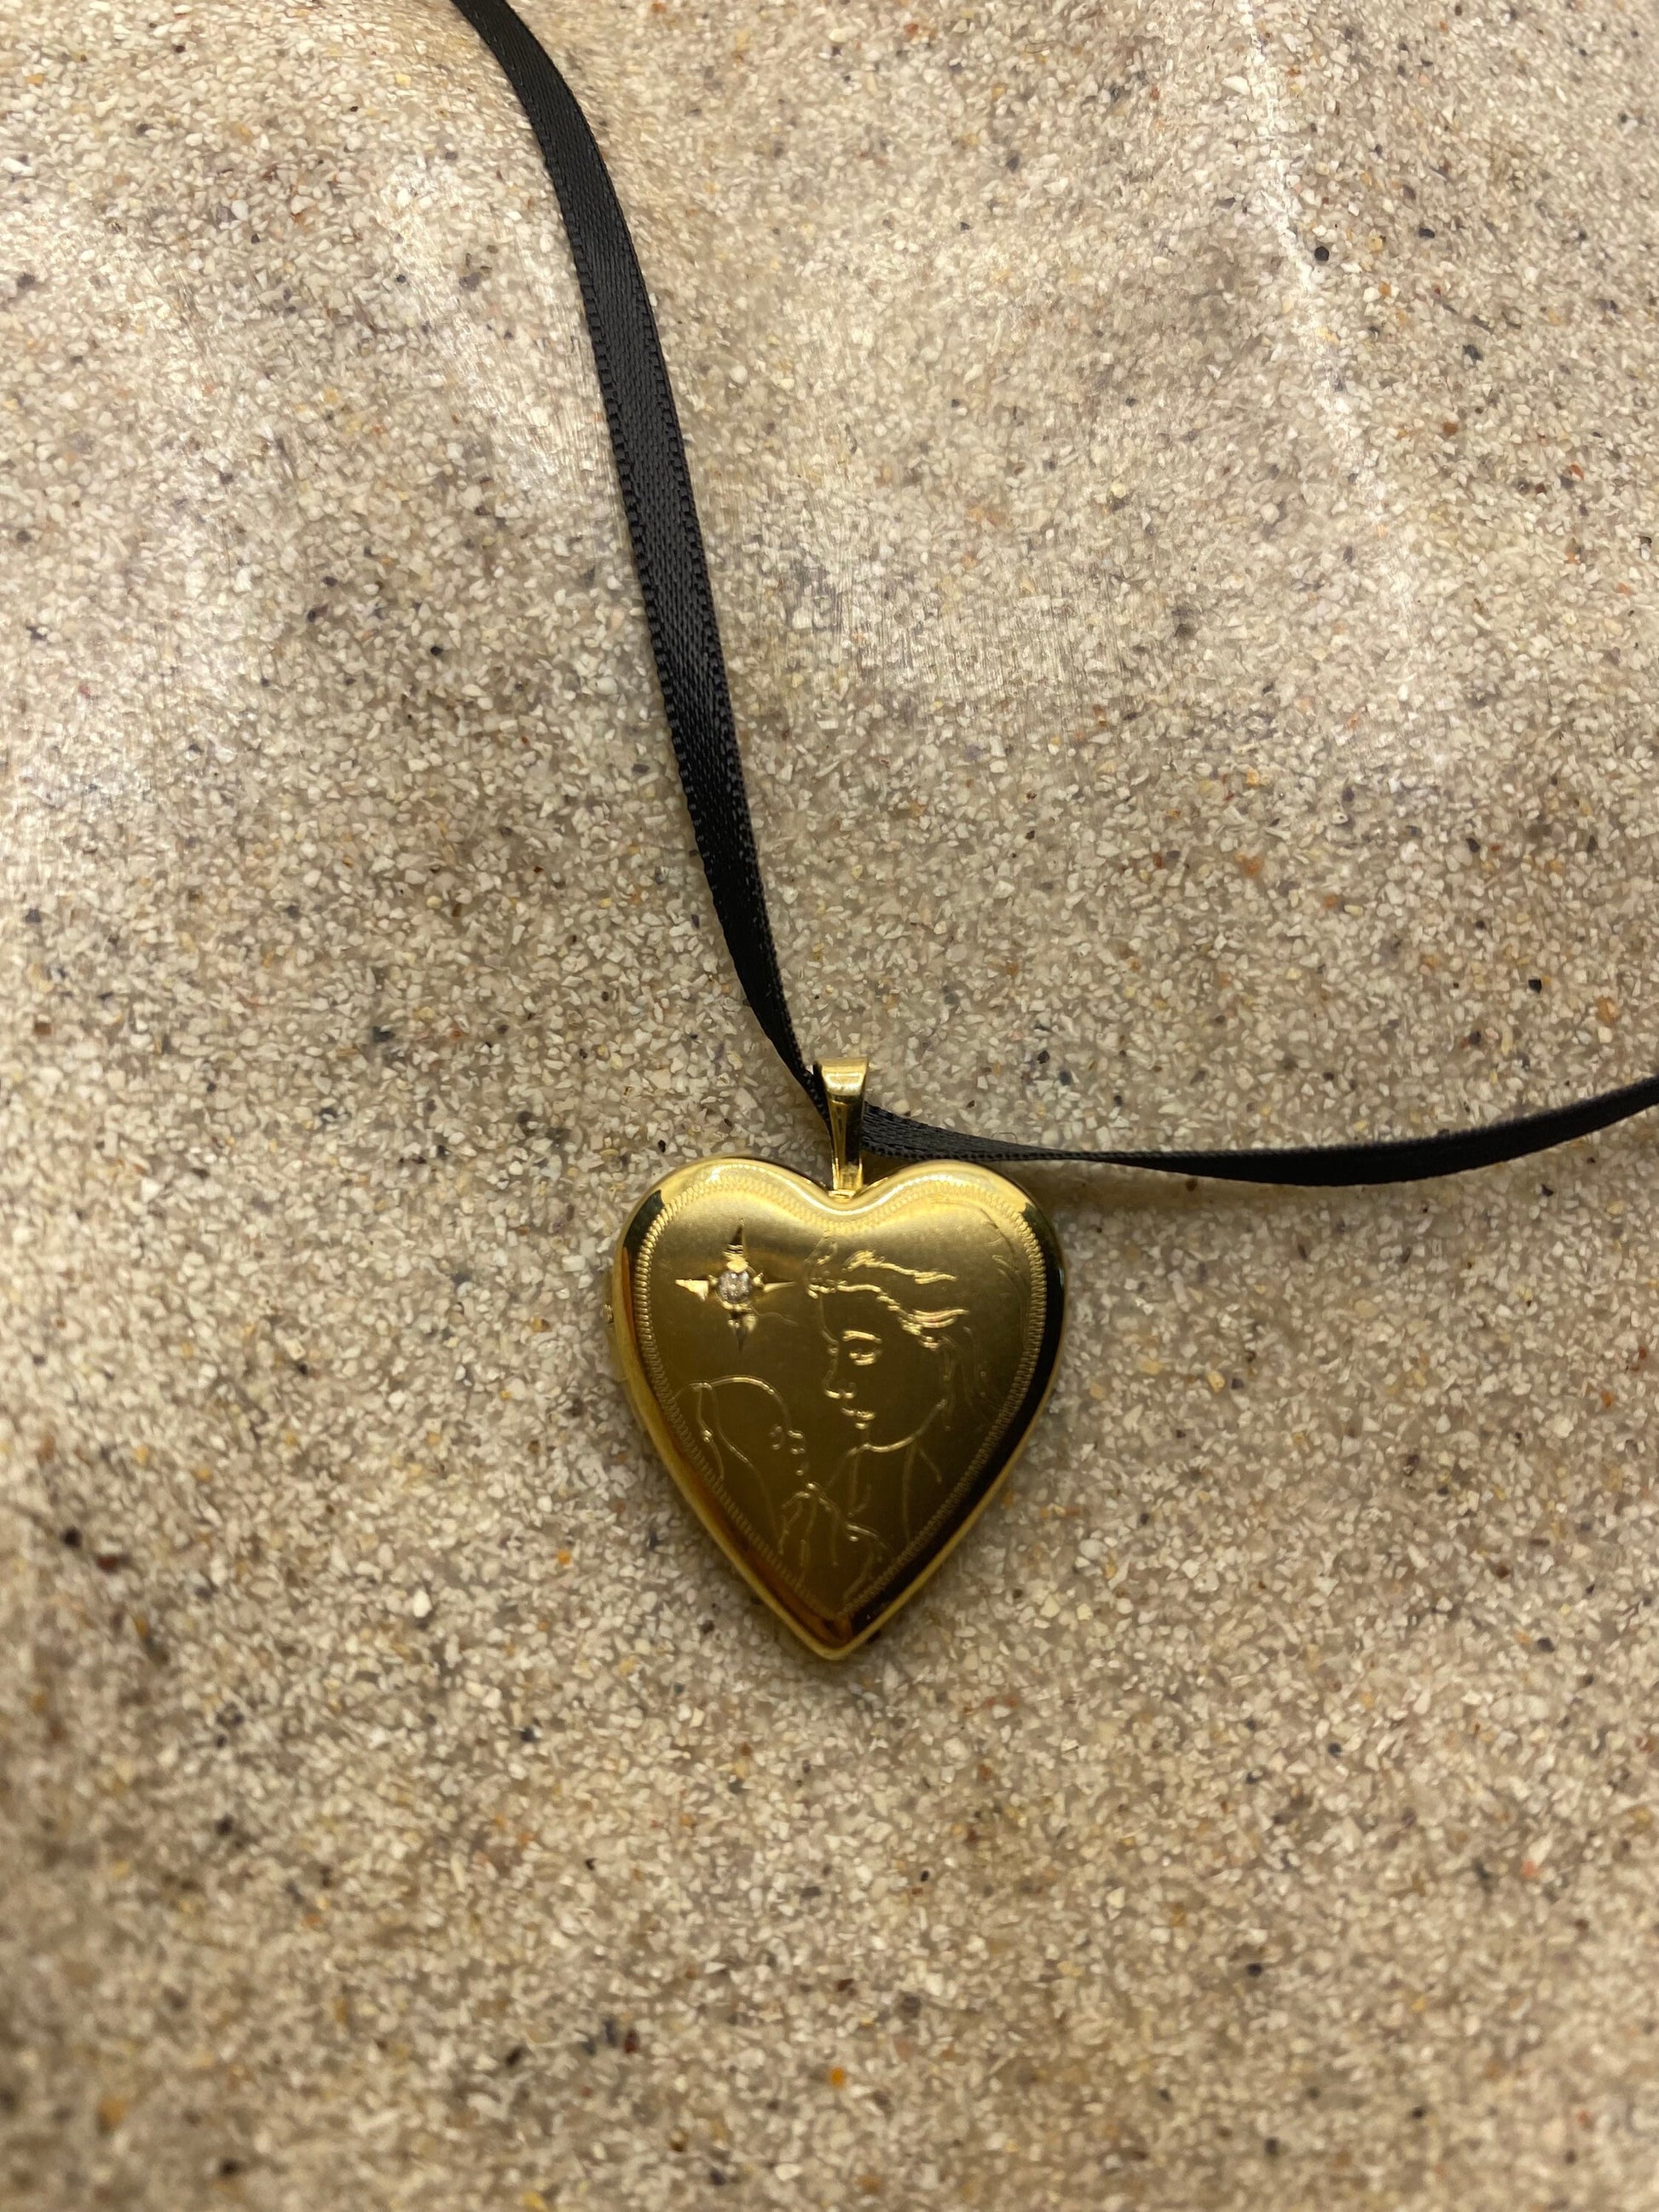 Vintage Gold Locket | Tiny Heart 9k Gold Filled Pendant Photo Memory Charm Engraved Mother Baby Diamond Star | Choker Necklace